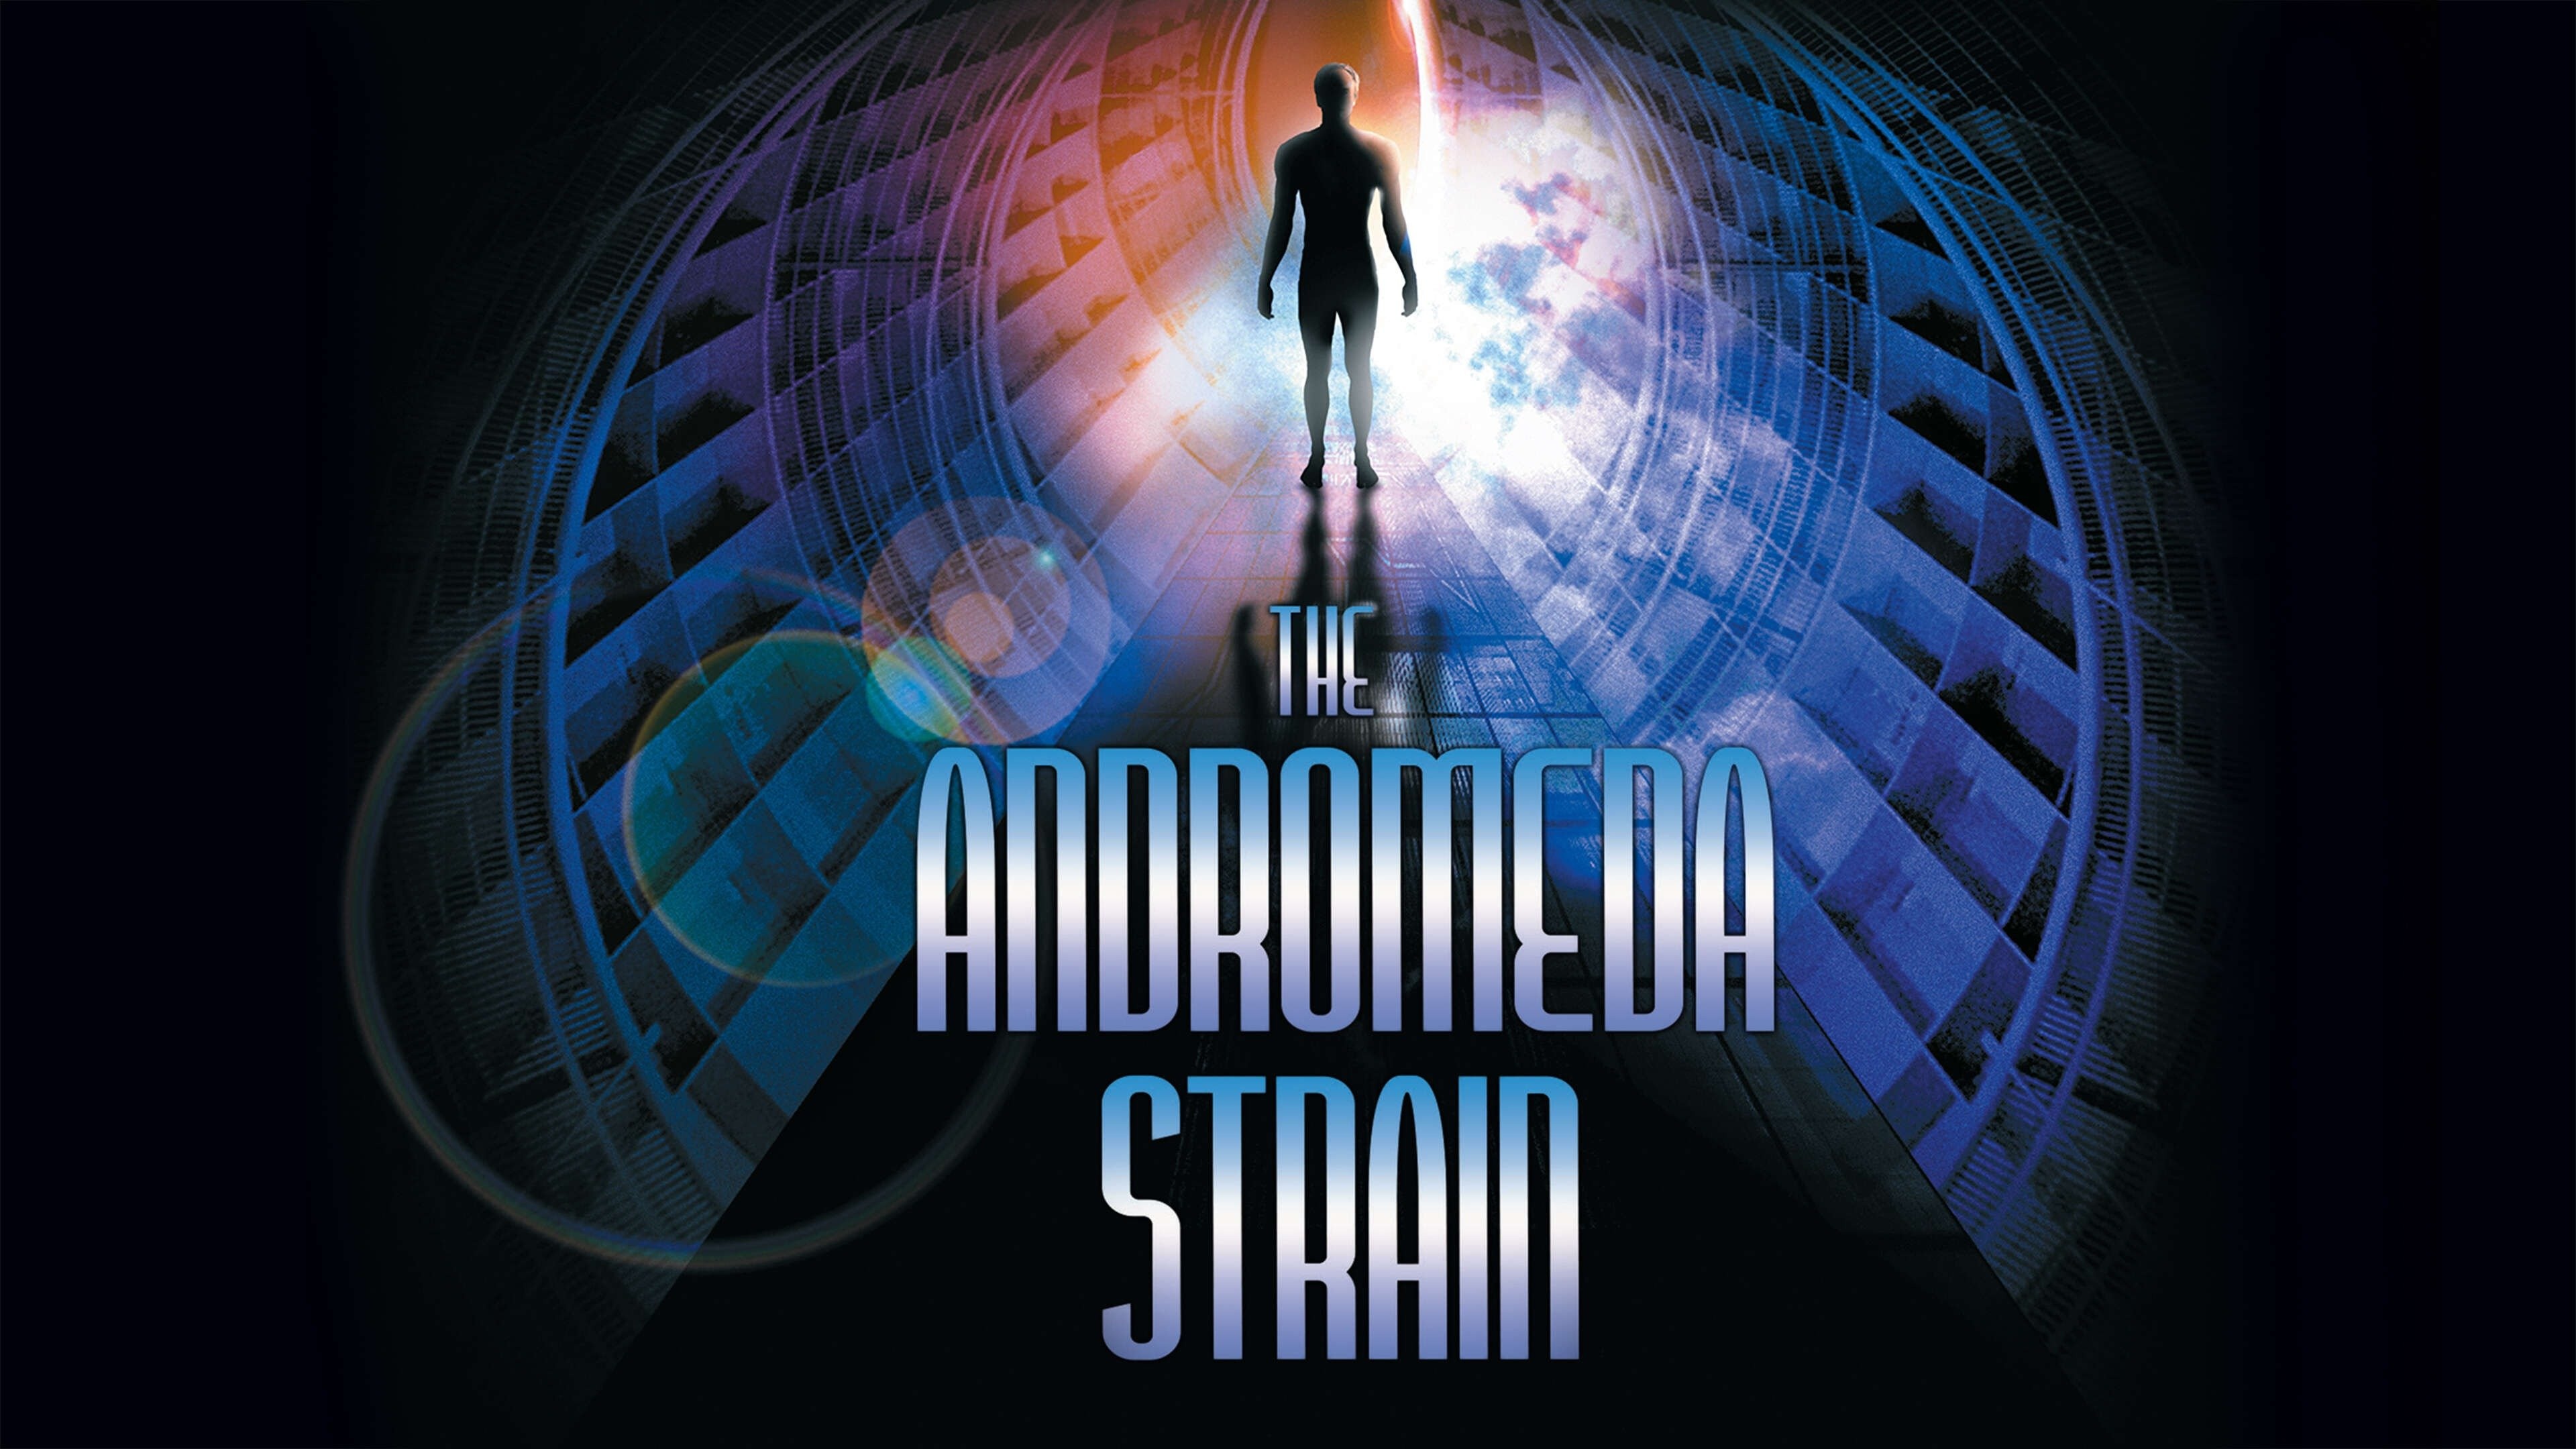 Robert Wise, Andromeda Strain, Full movie online, Plex, 3840x2160 4K Desktop